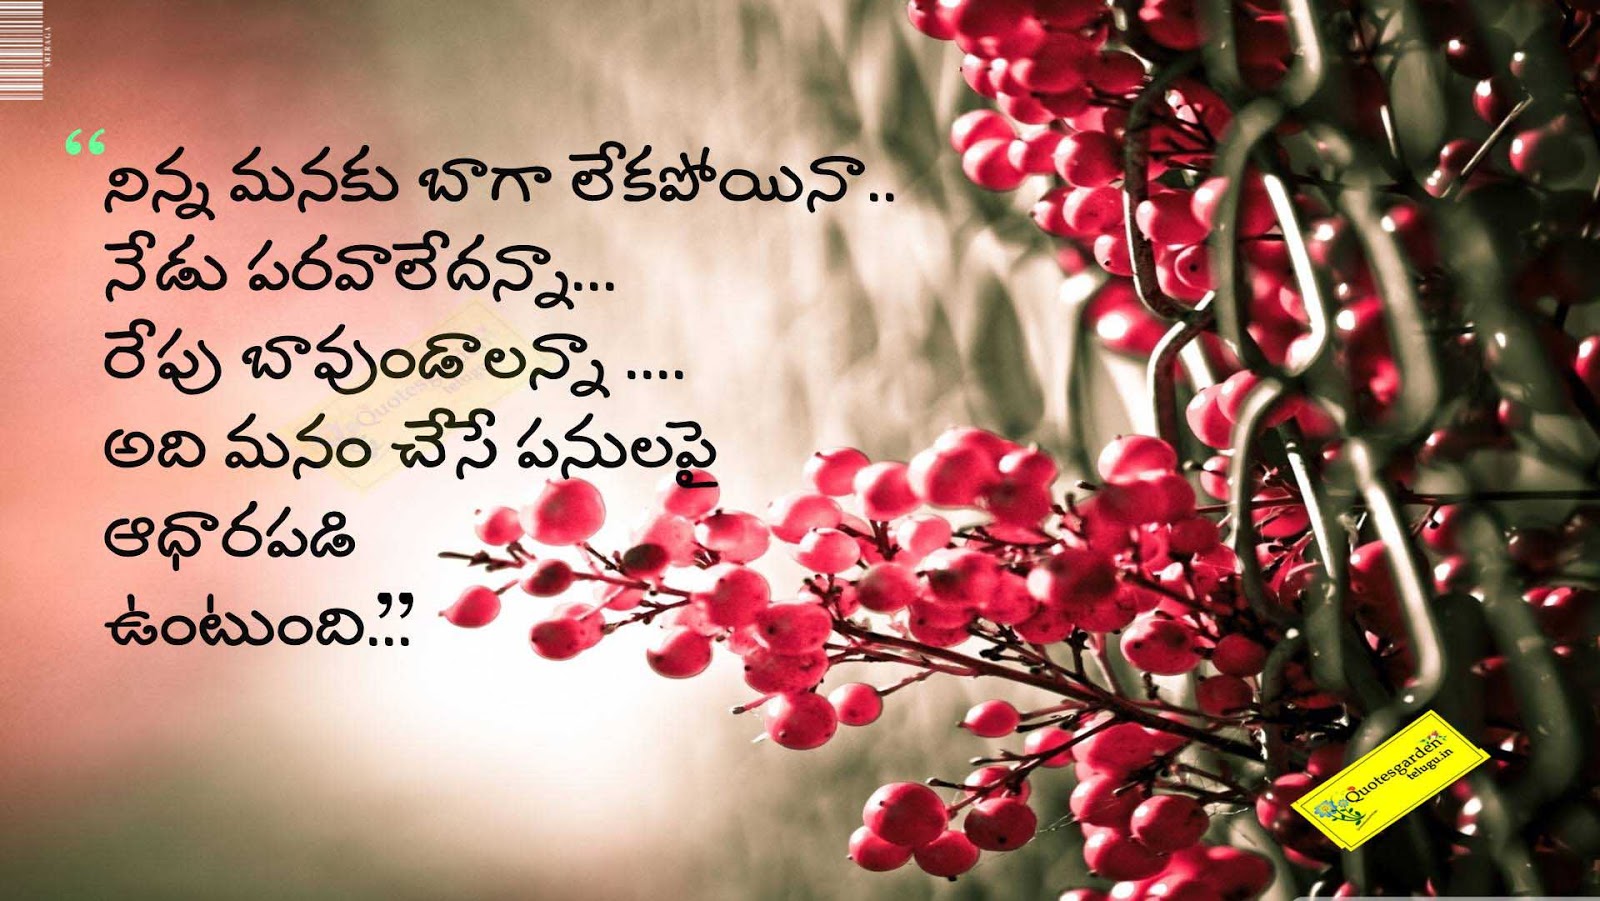 Heart touching Life quotes in telugu | QUOTES GARDEN TELUGU ...